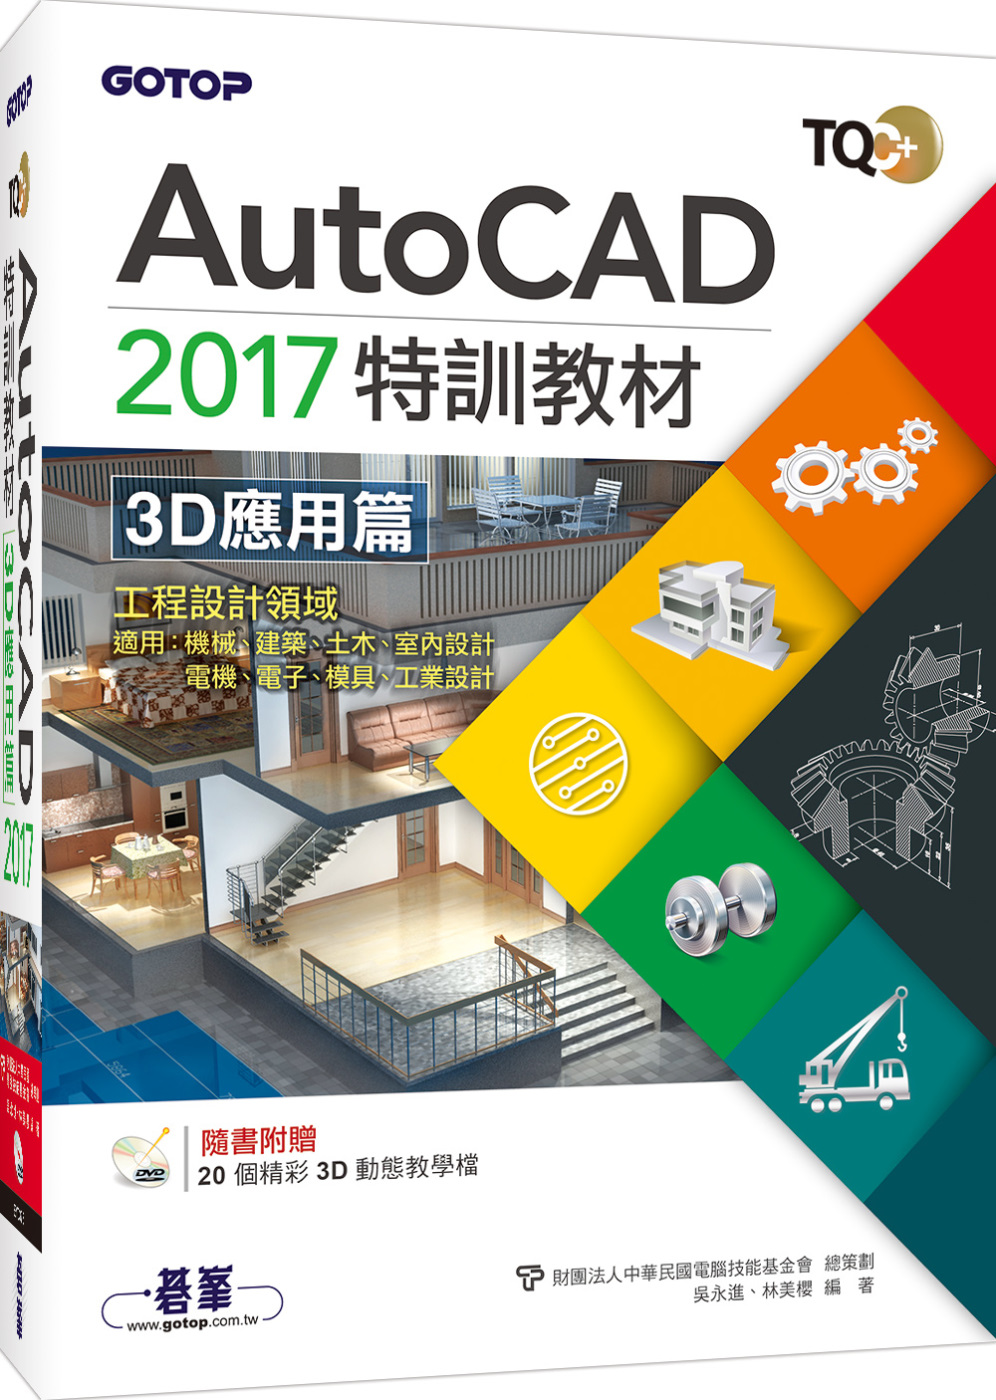 TQC＋AutoCAD 2017特訓教材－3D應用篇(附贈20個精彩3D動態教學檔)